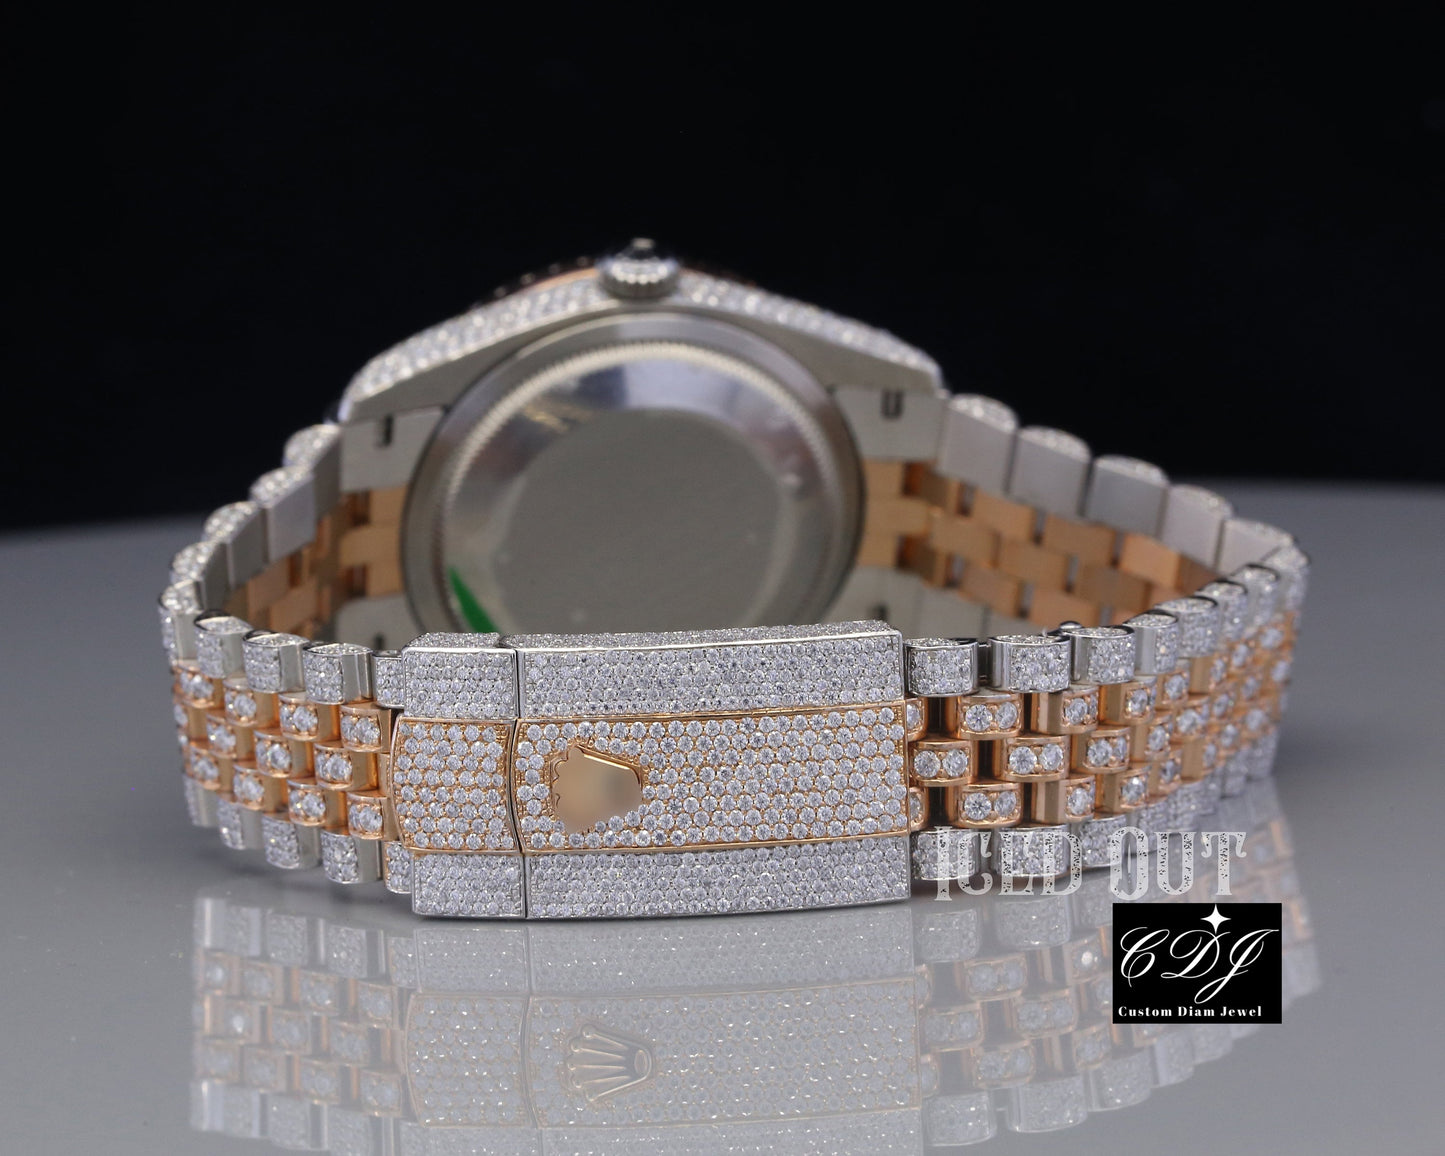 Round Dial Two Tone Hip Hop Diamond Watch(13 CT)  customdiamjewel   